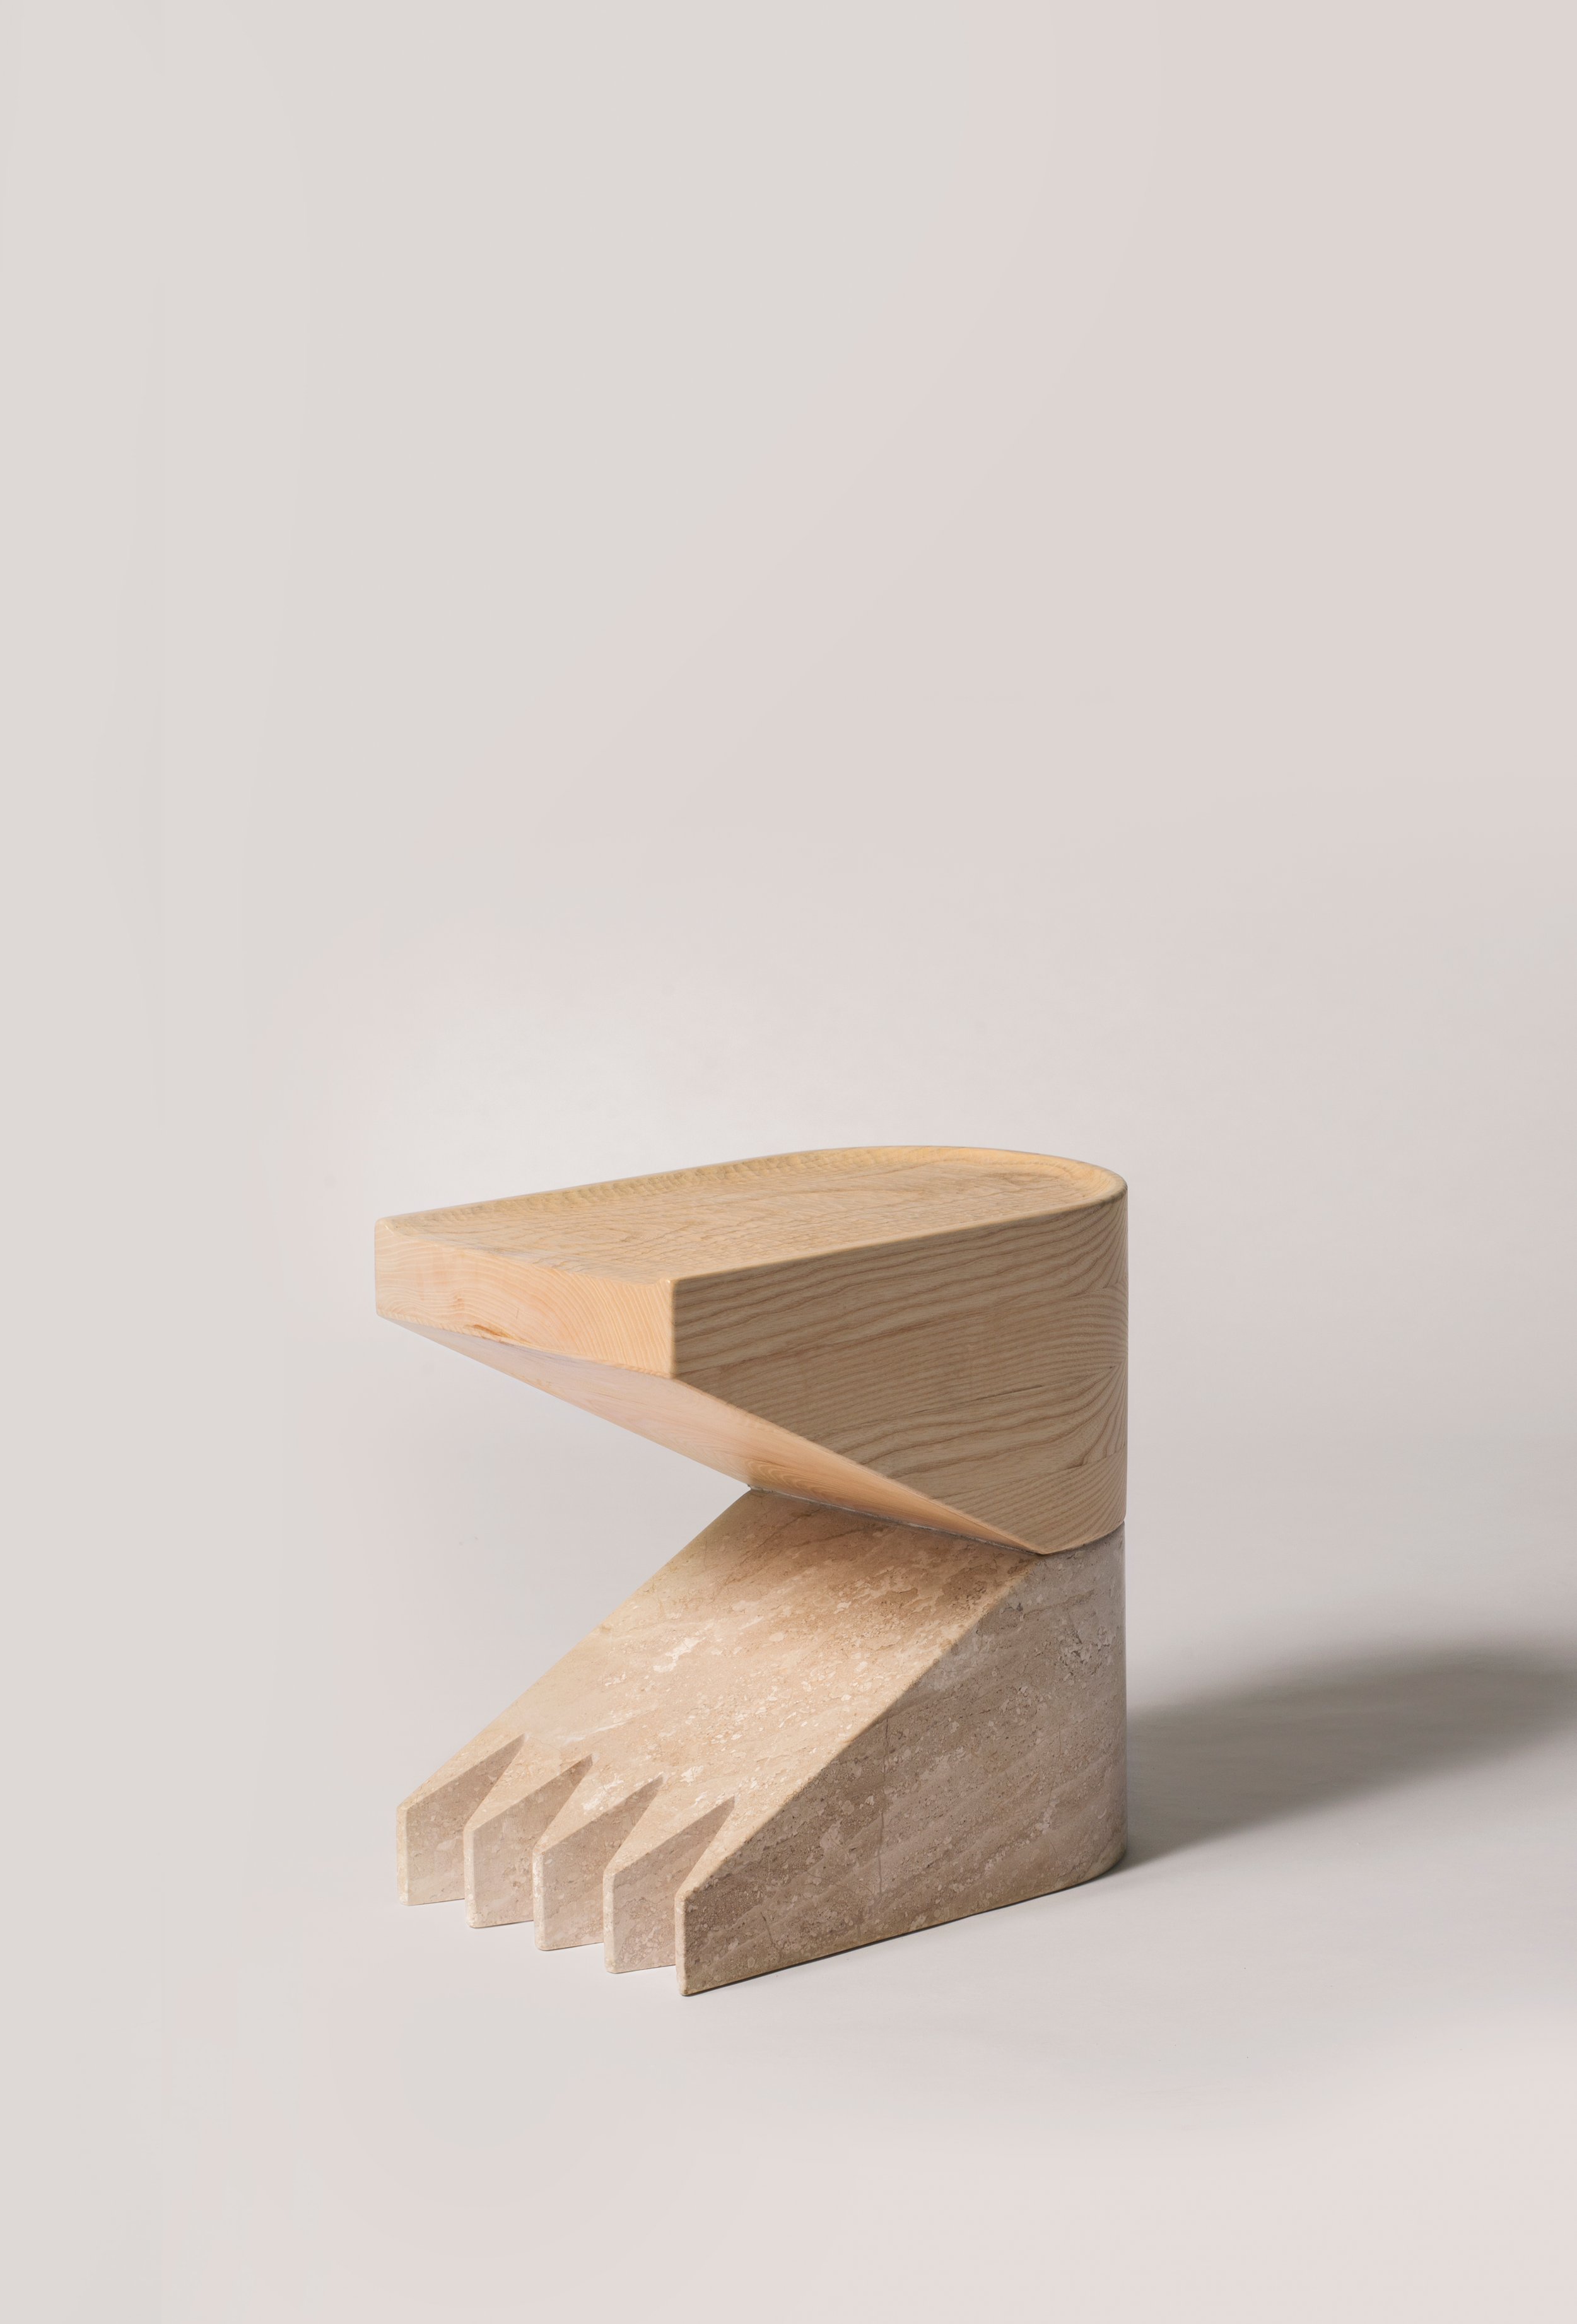 Mannu Side Table designed by Ambroise Maggiar, made by CP Basalti _ Karmine Piras for Pretziada_side.jpg